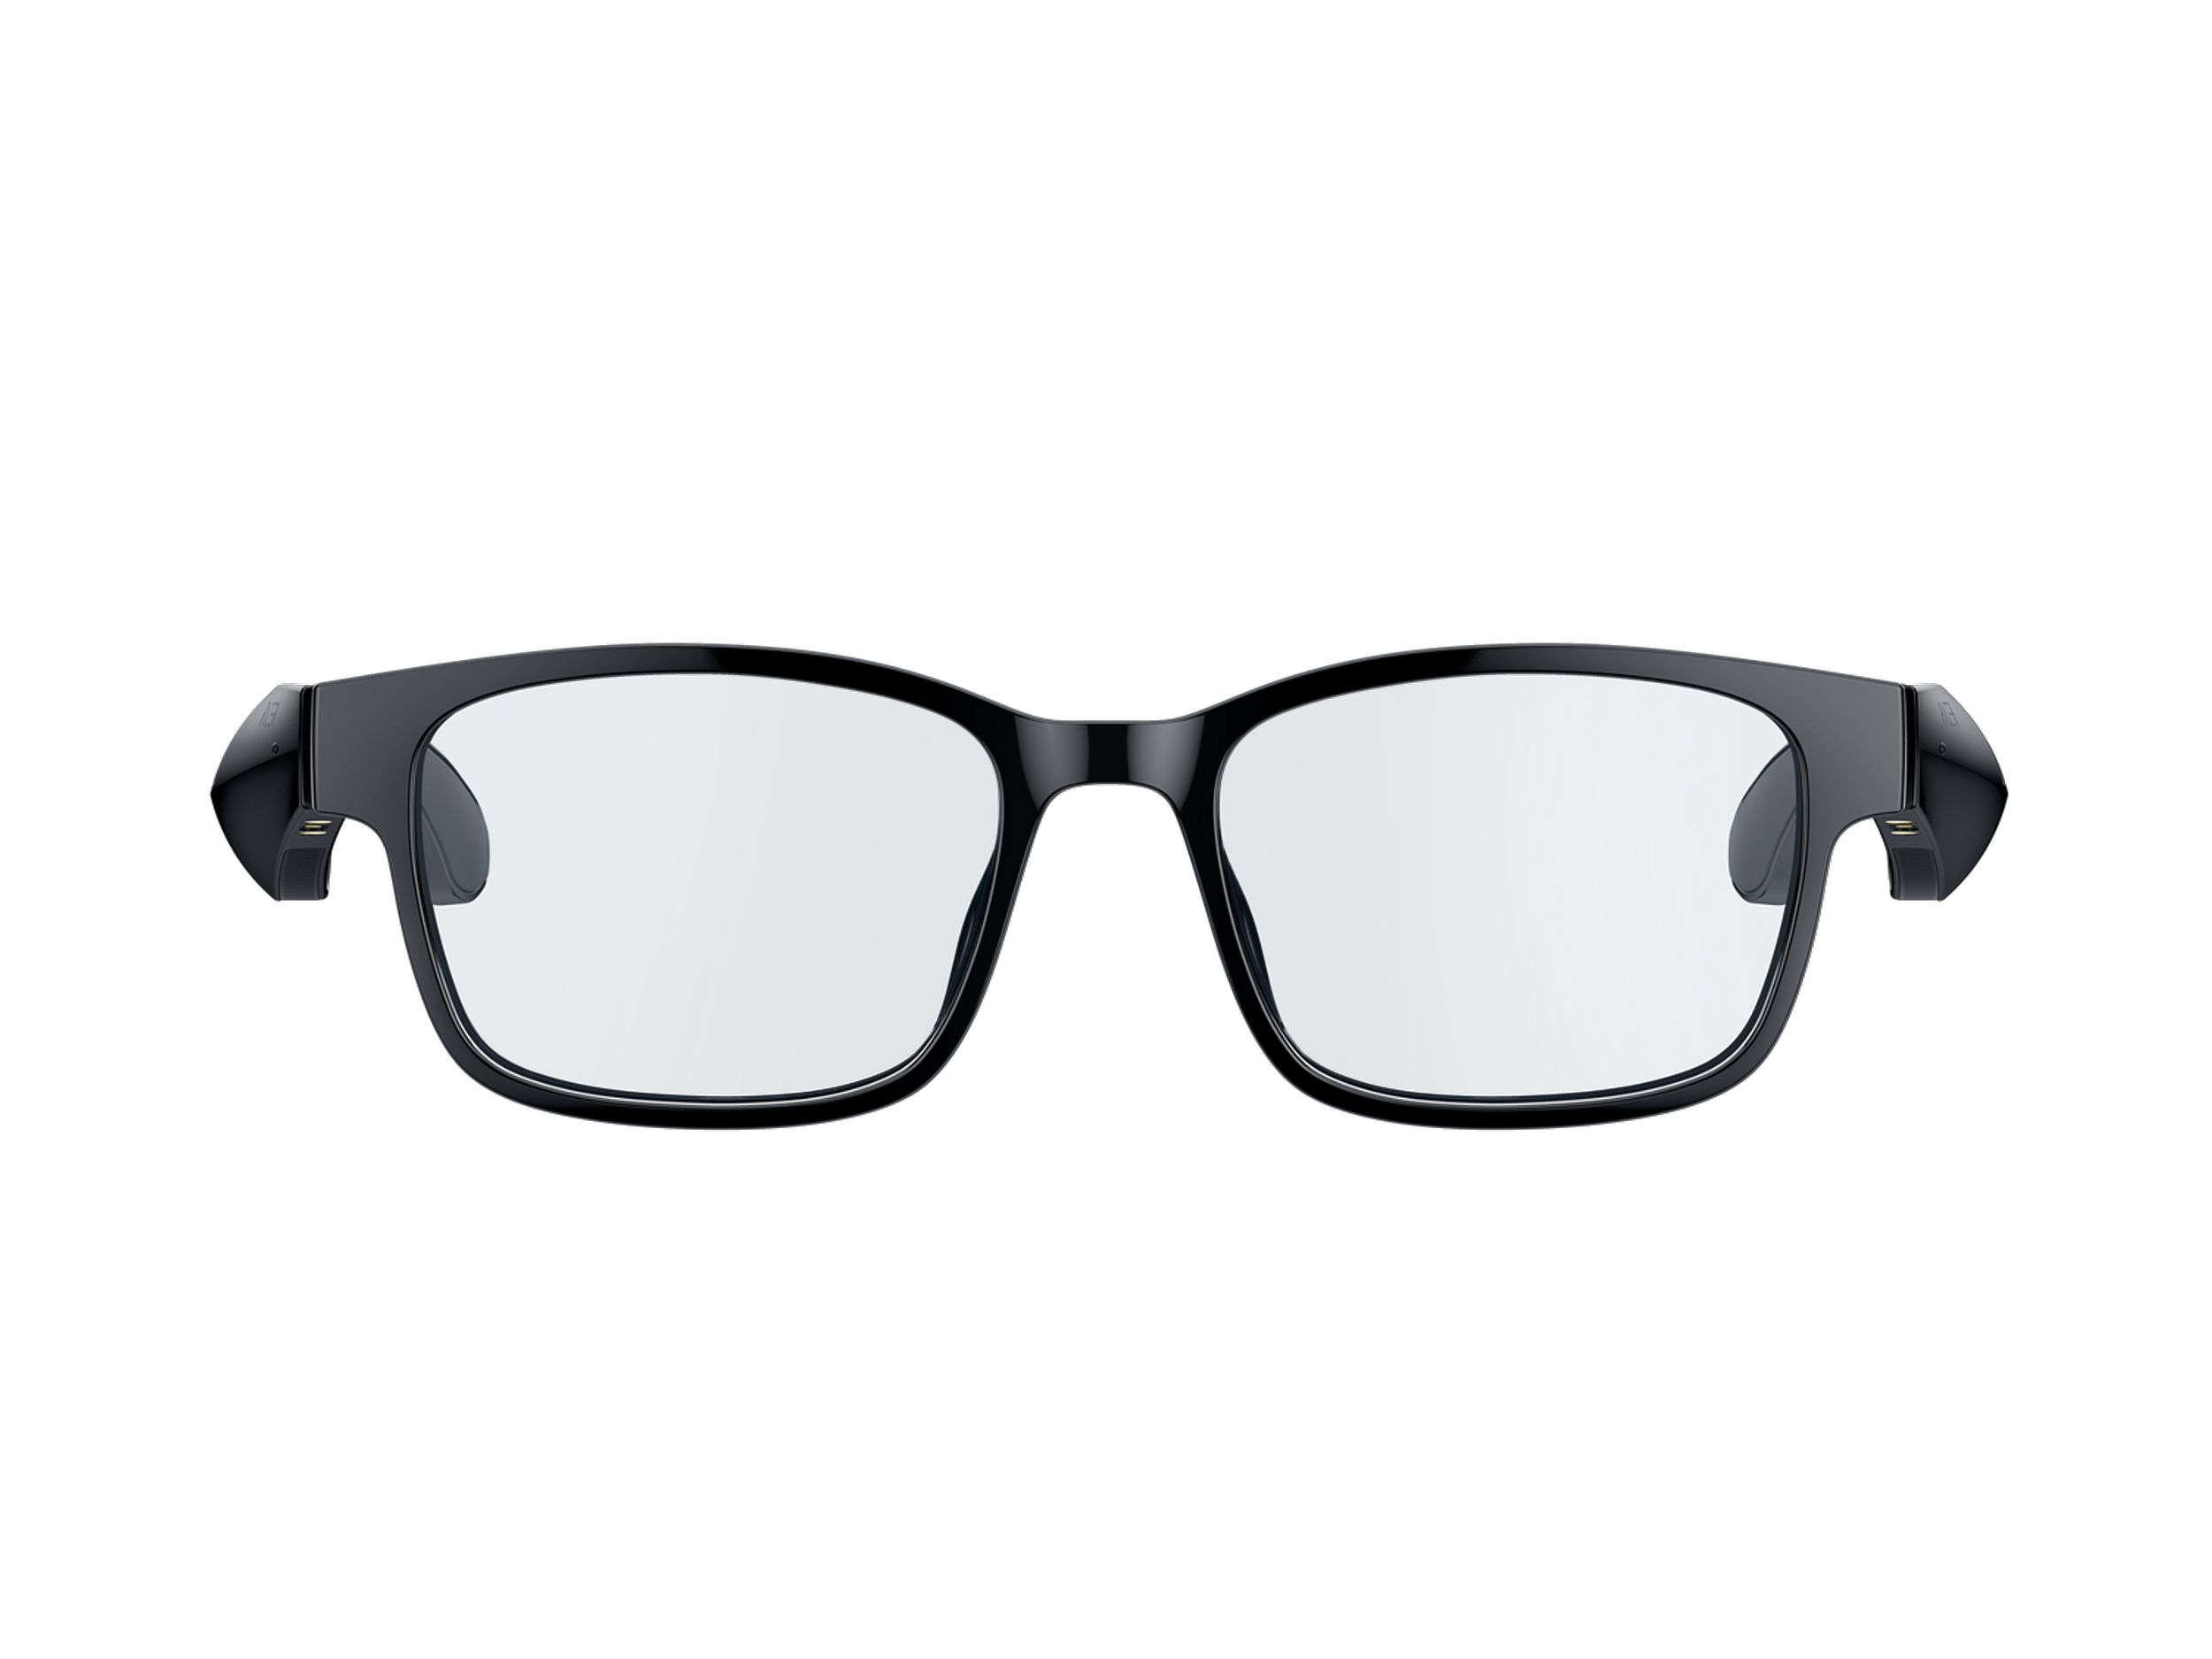 RAZER Anzu S M, Open-ear Bluetooth Glasses Smart schwarz